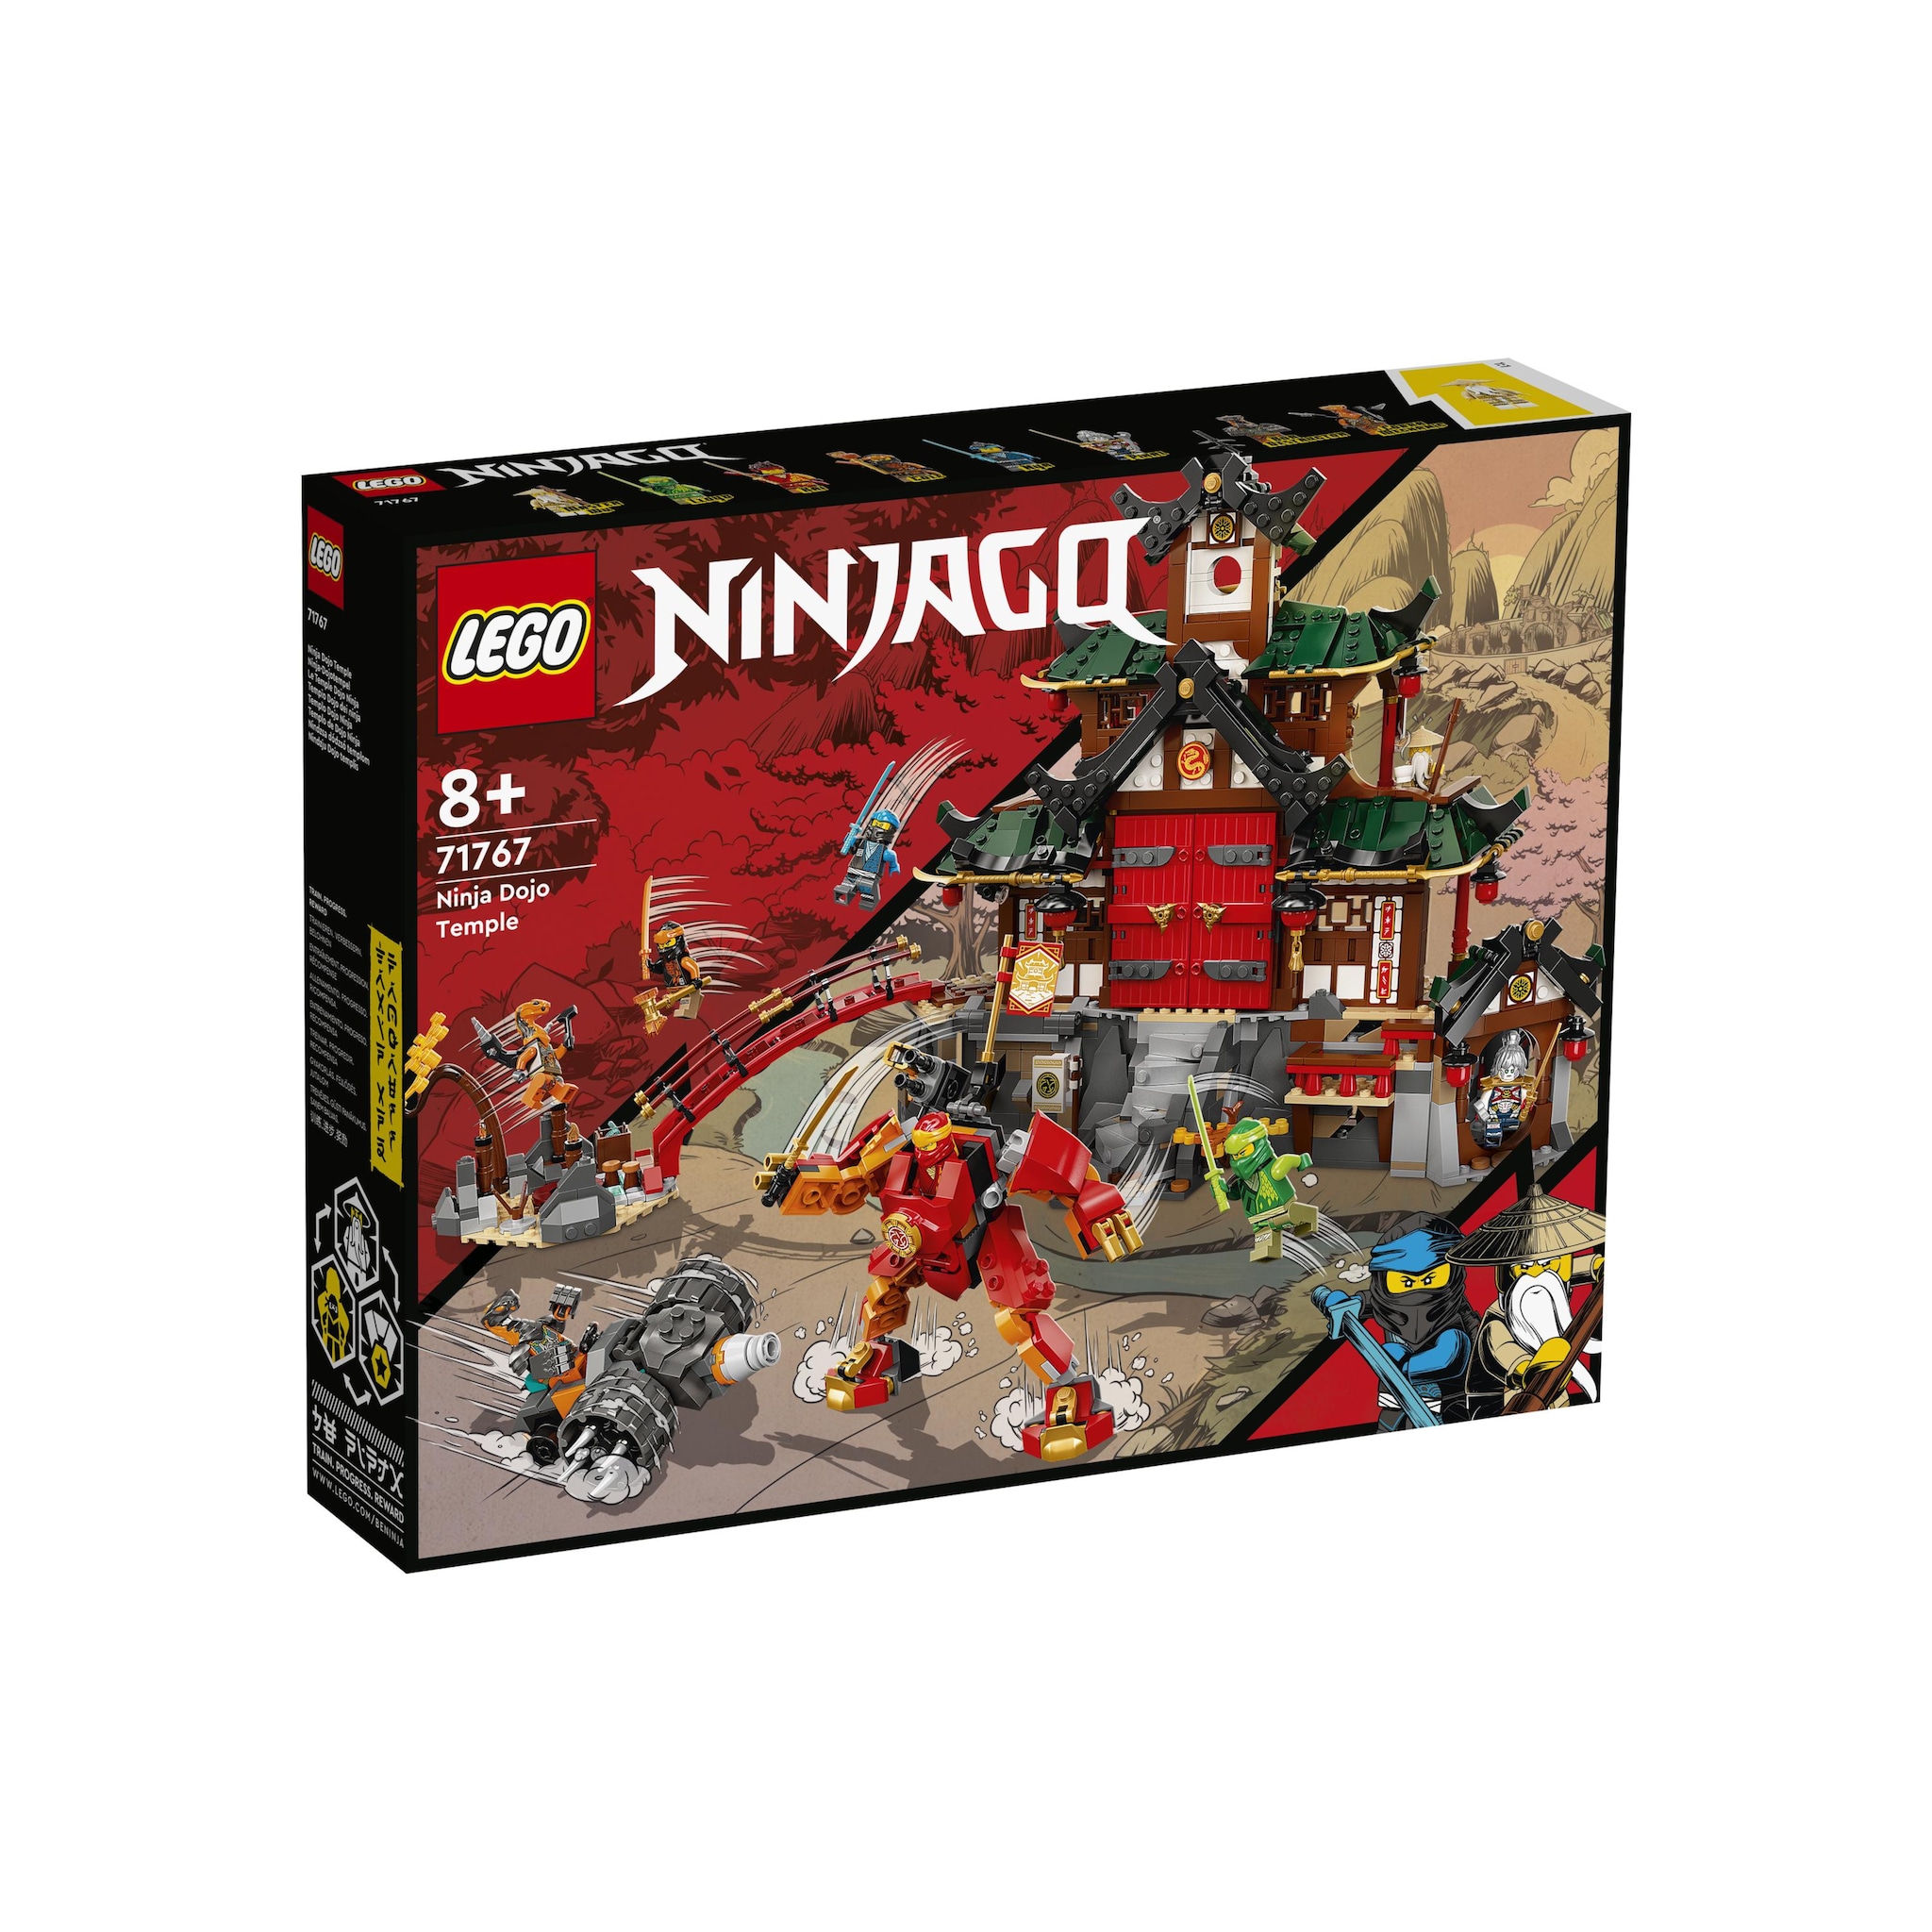 LEGO Ninjago - Ninja-Dojotempel (71767)